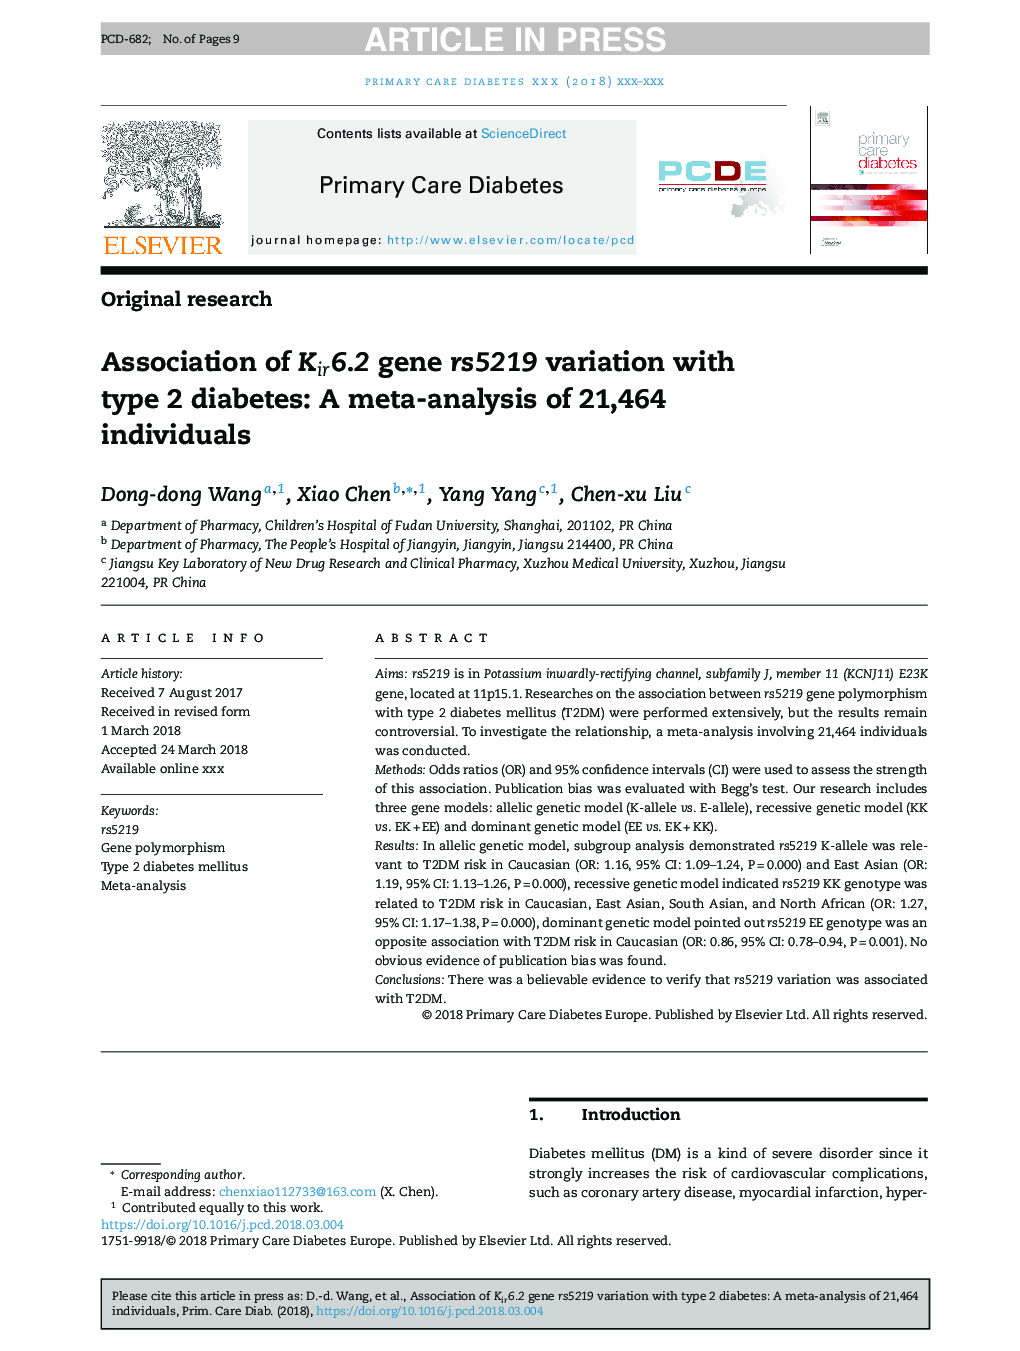 Association of Kir6.2 gene rs5219 variation with type 2 diabetes: A meta-analysis of 21,464 individuals